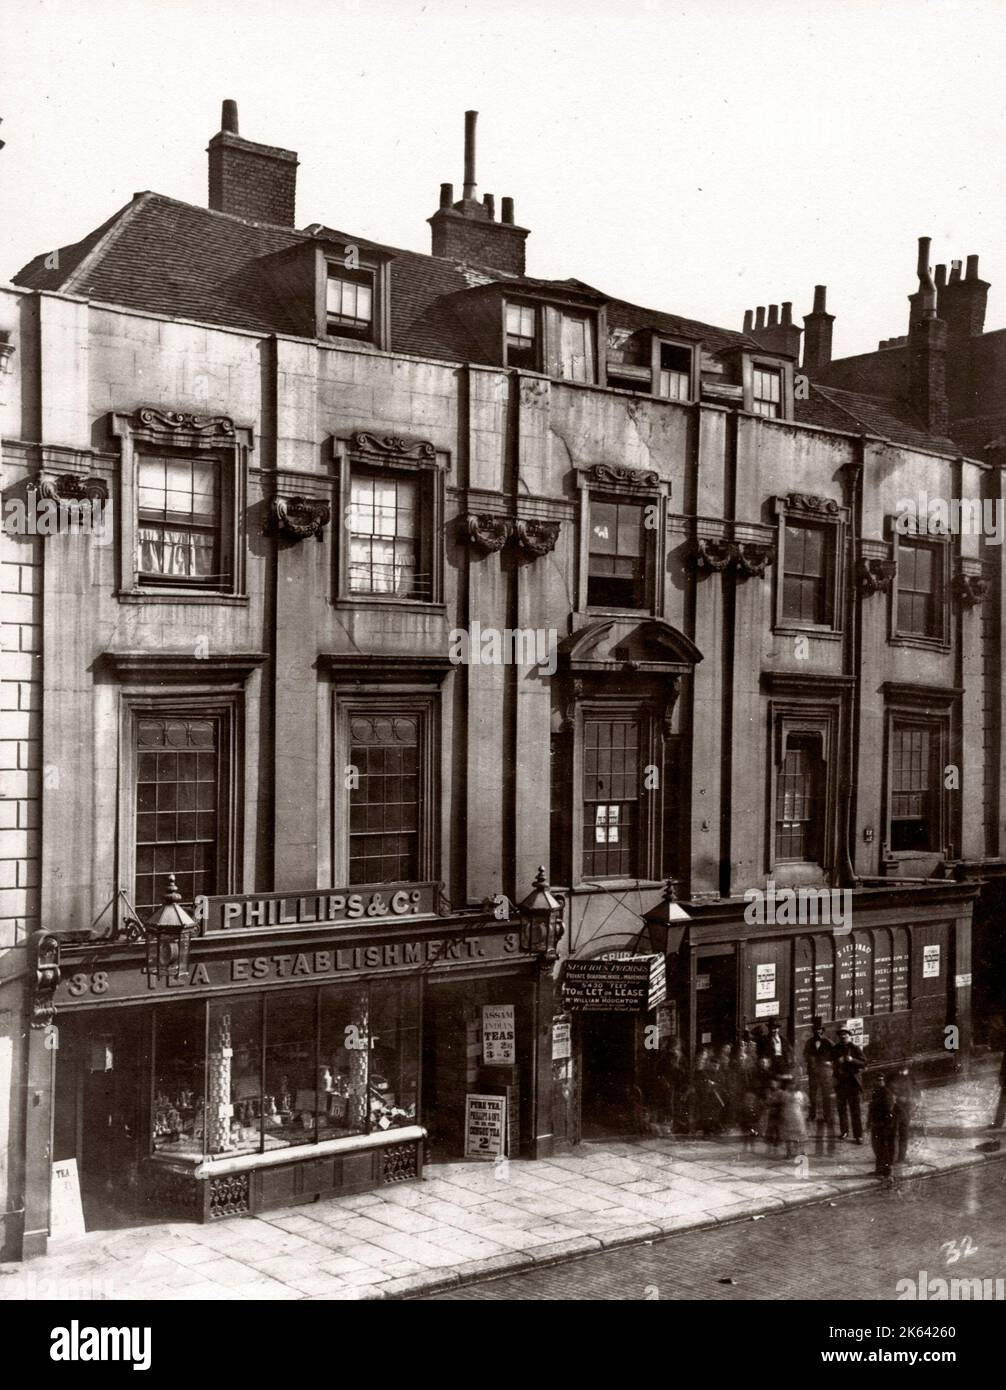 c.1880 London - Phillips and Company tea establishment - historic London by Dixon and Bool Stock Photo